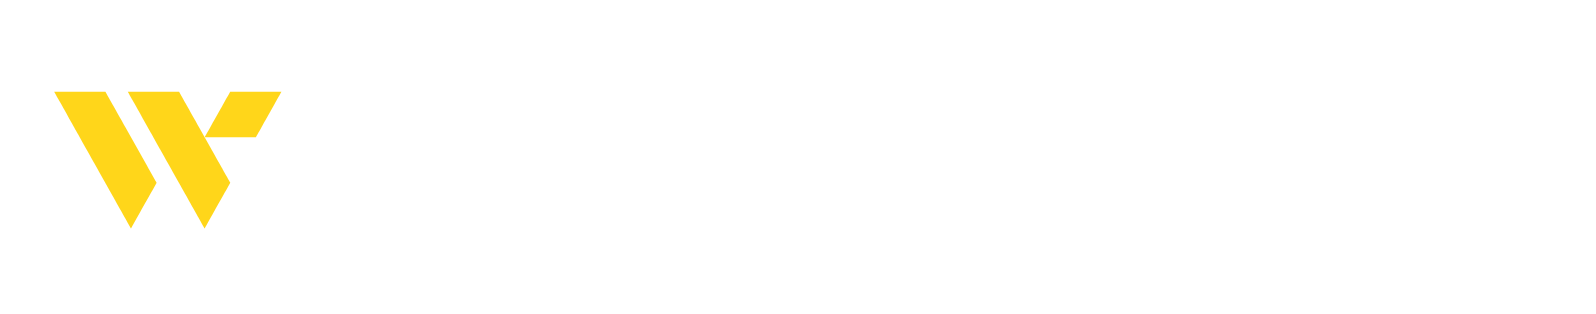 Webster Financial logo grand pour les fonds sombres (PNG transparent)